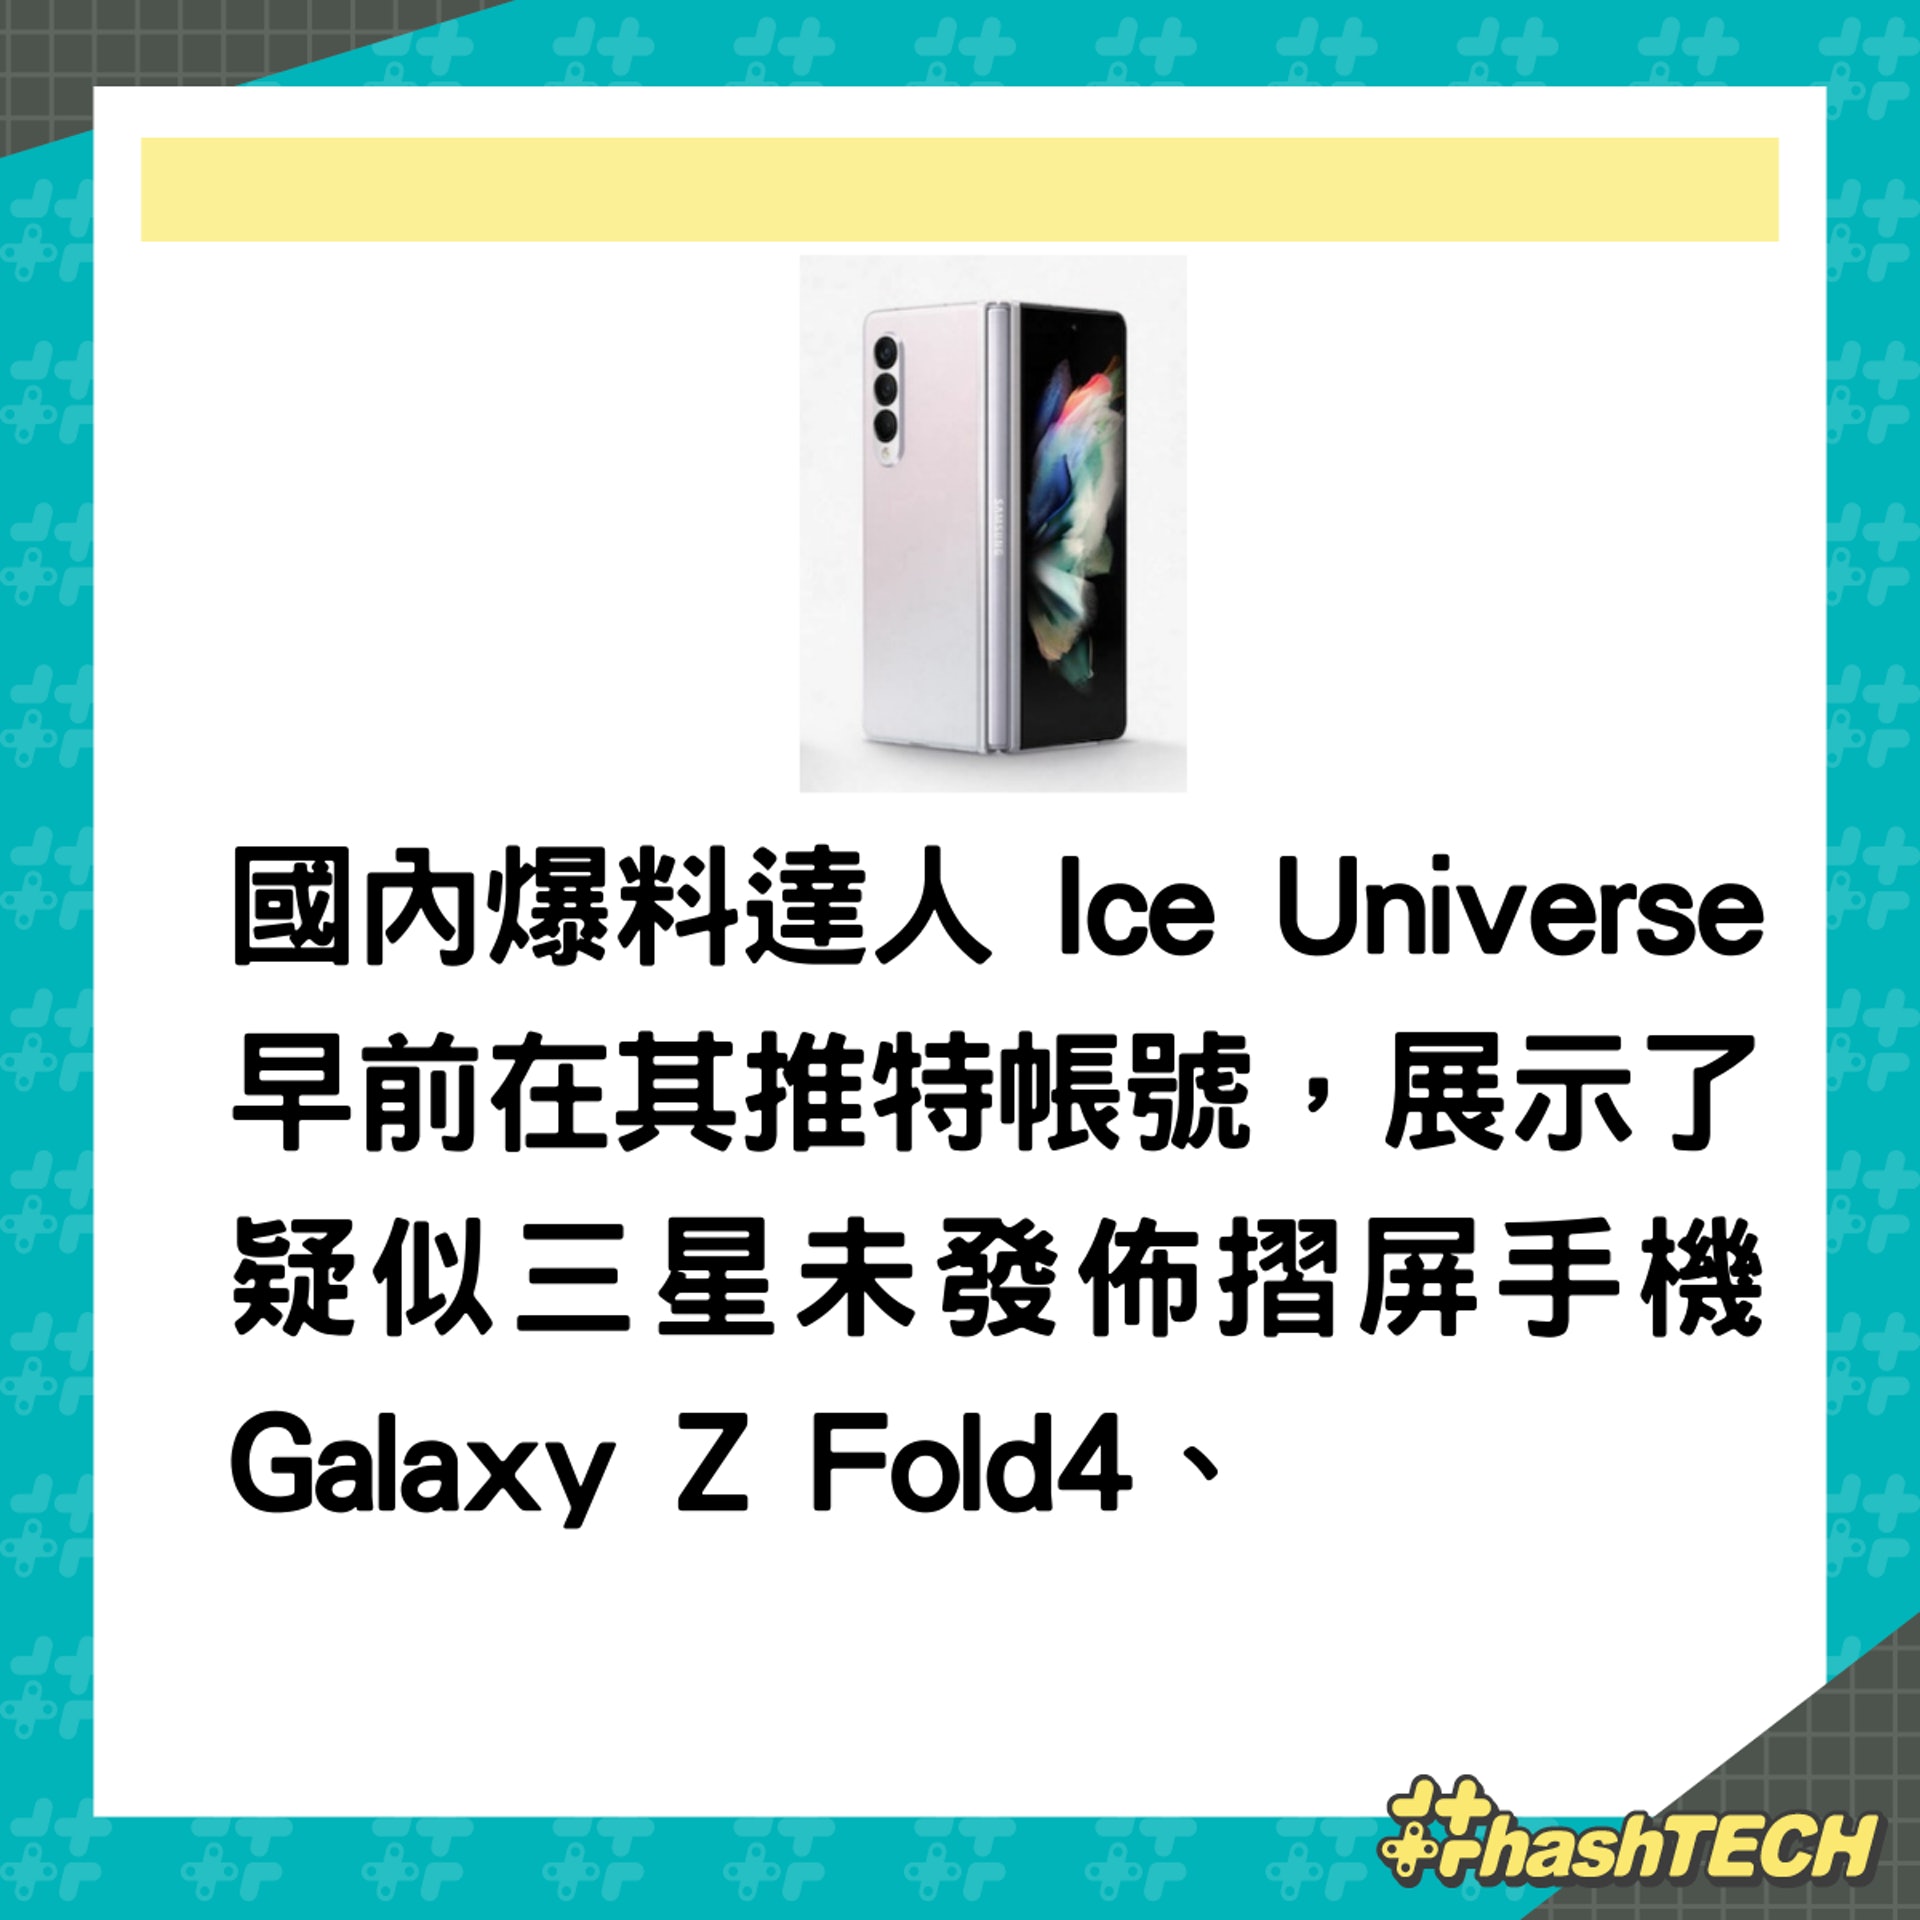 Samsung Galaxy Z Fold4改善主屏摺合表現，更指會用上Snapdragon 8+ 晶片組。（01製圖；samsung）